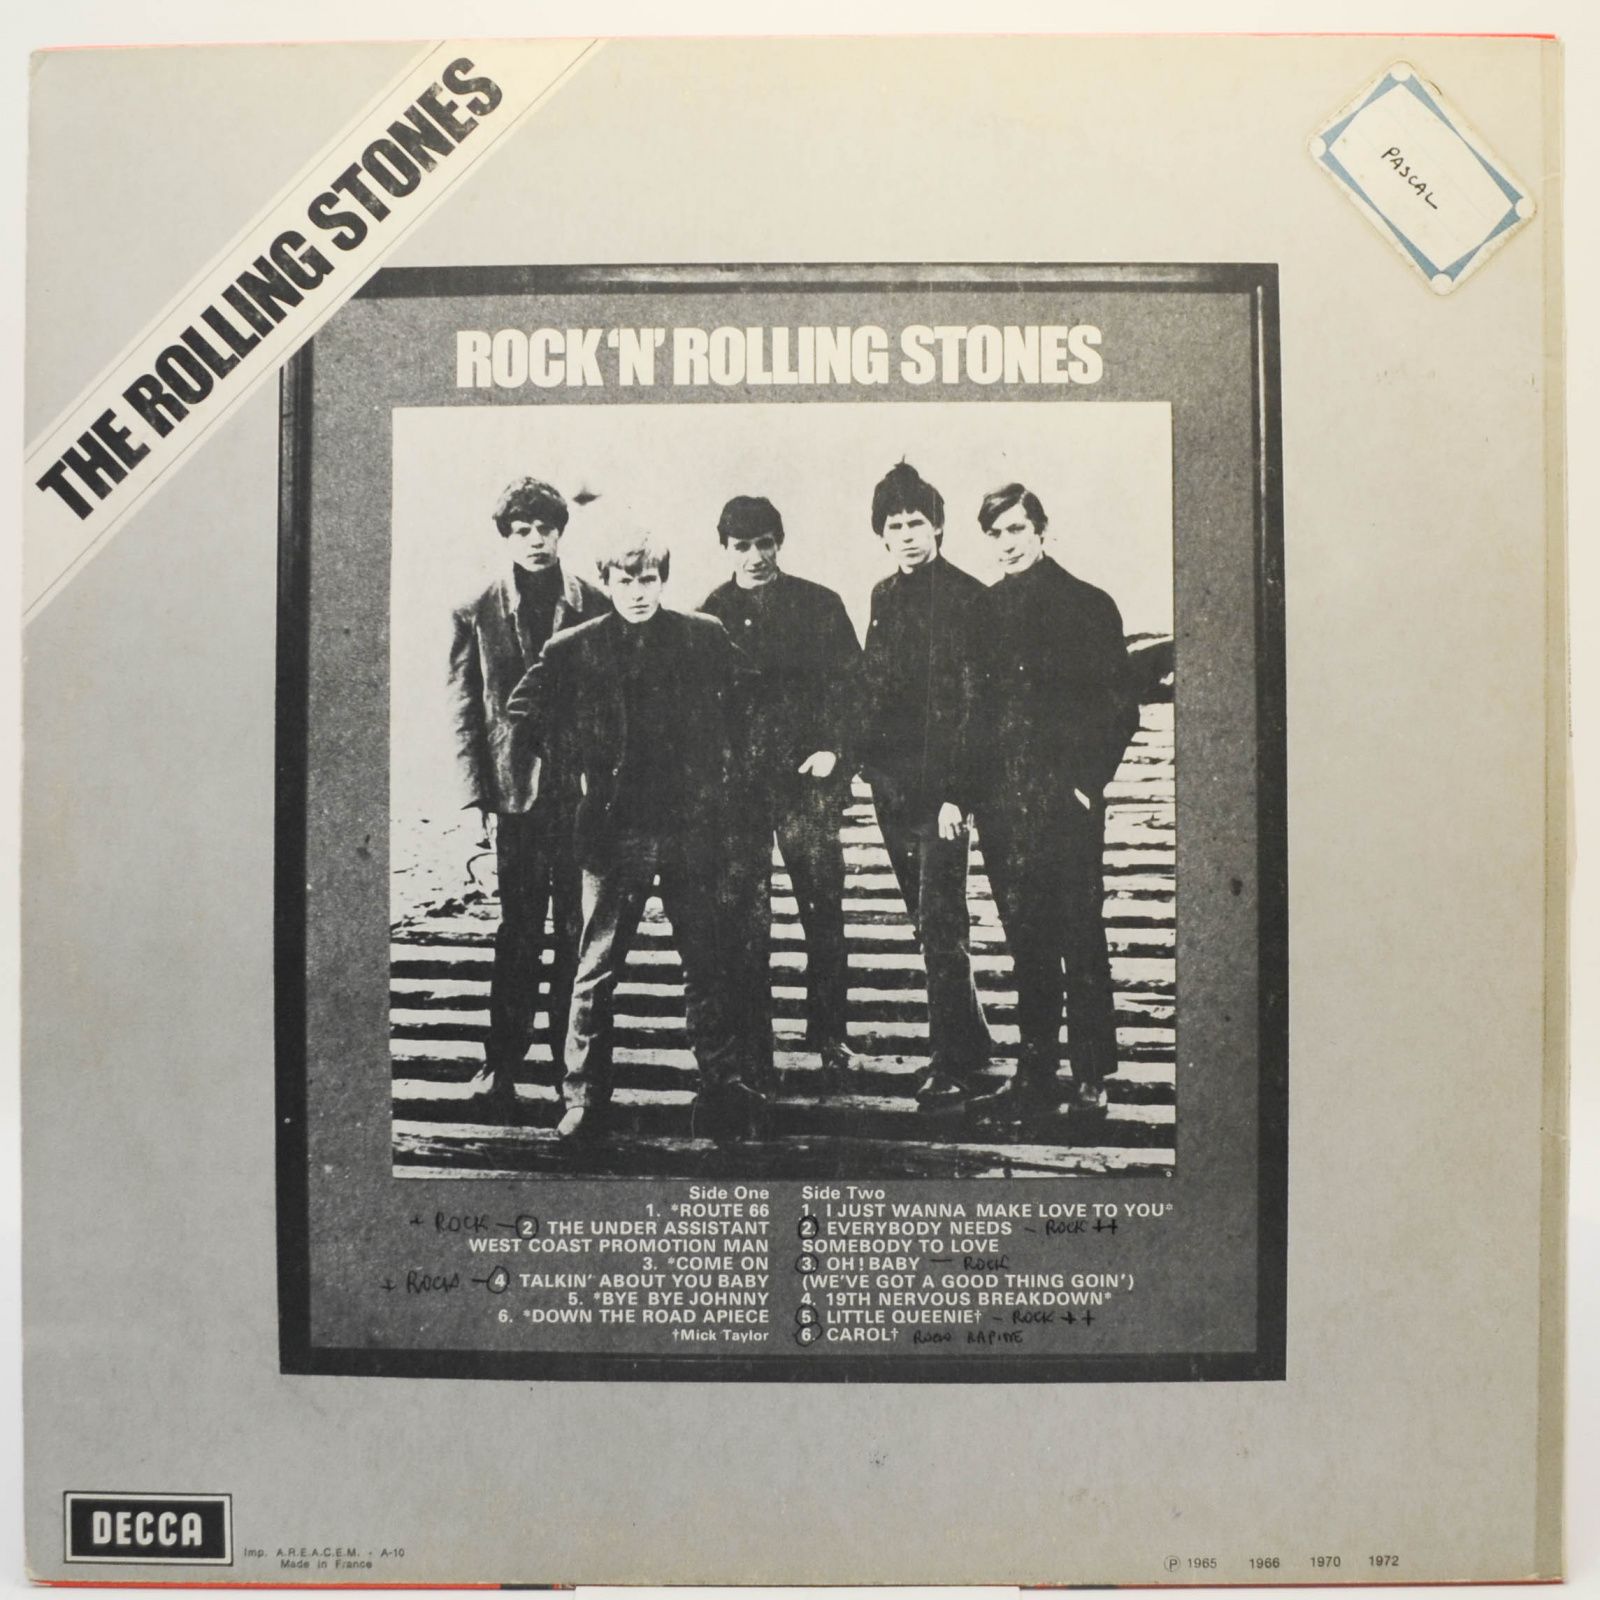 Rolling Stones — Rock 'N' Rolling Stones, 1972